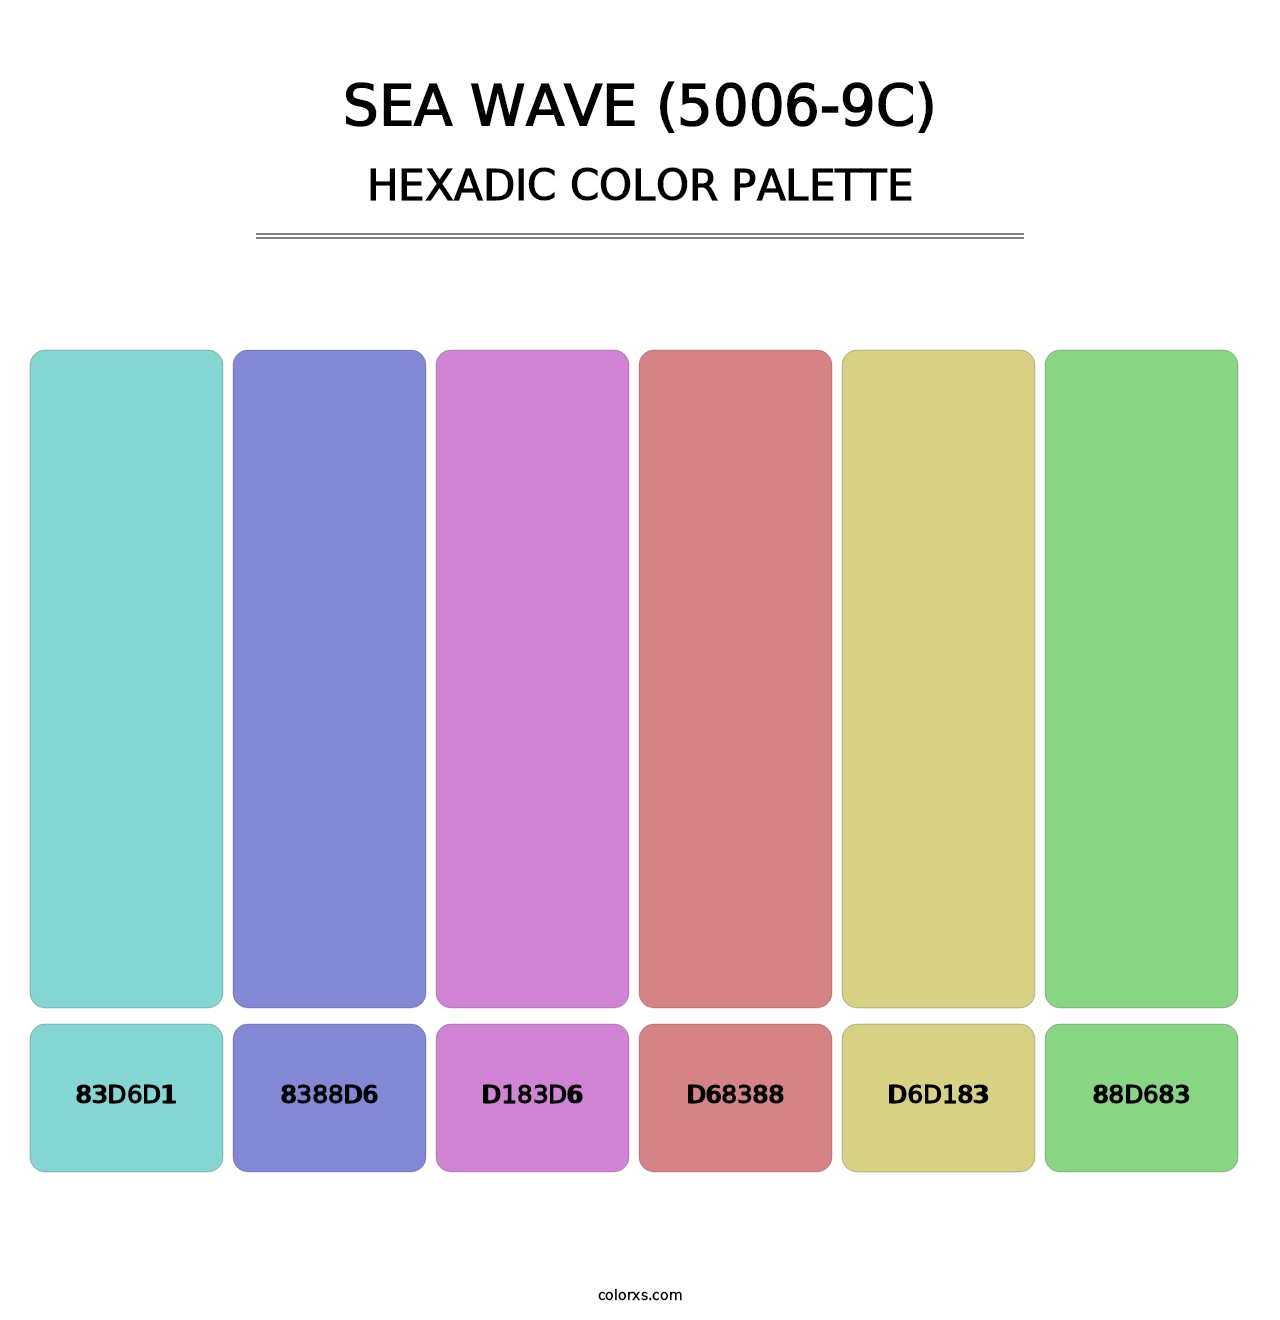 Sea Wave (5006-9C) - Hexadic Color Palette